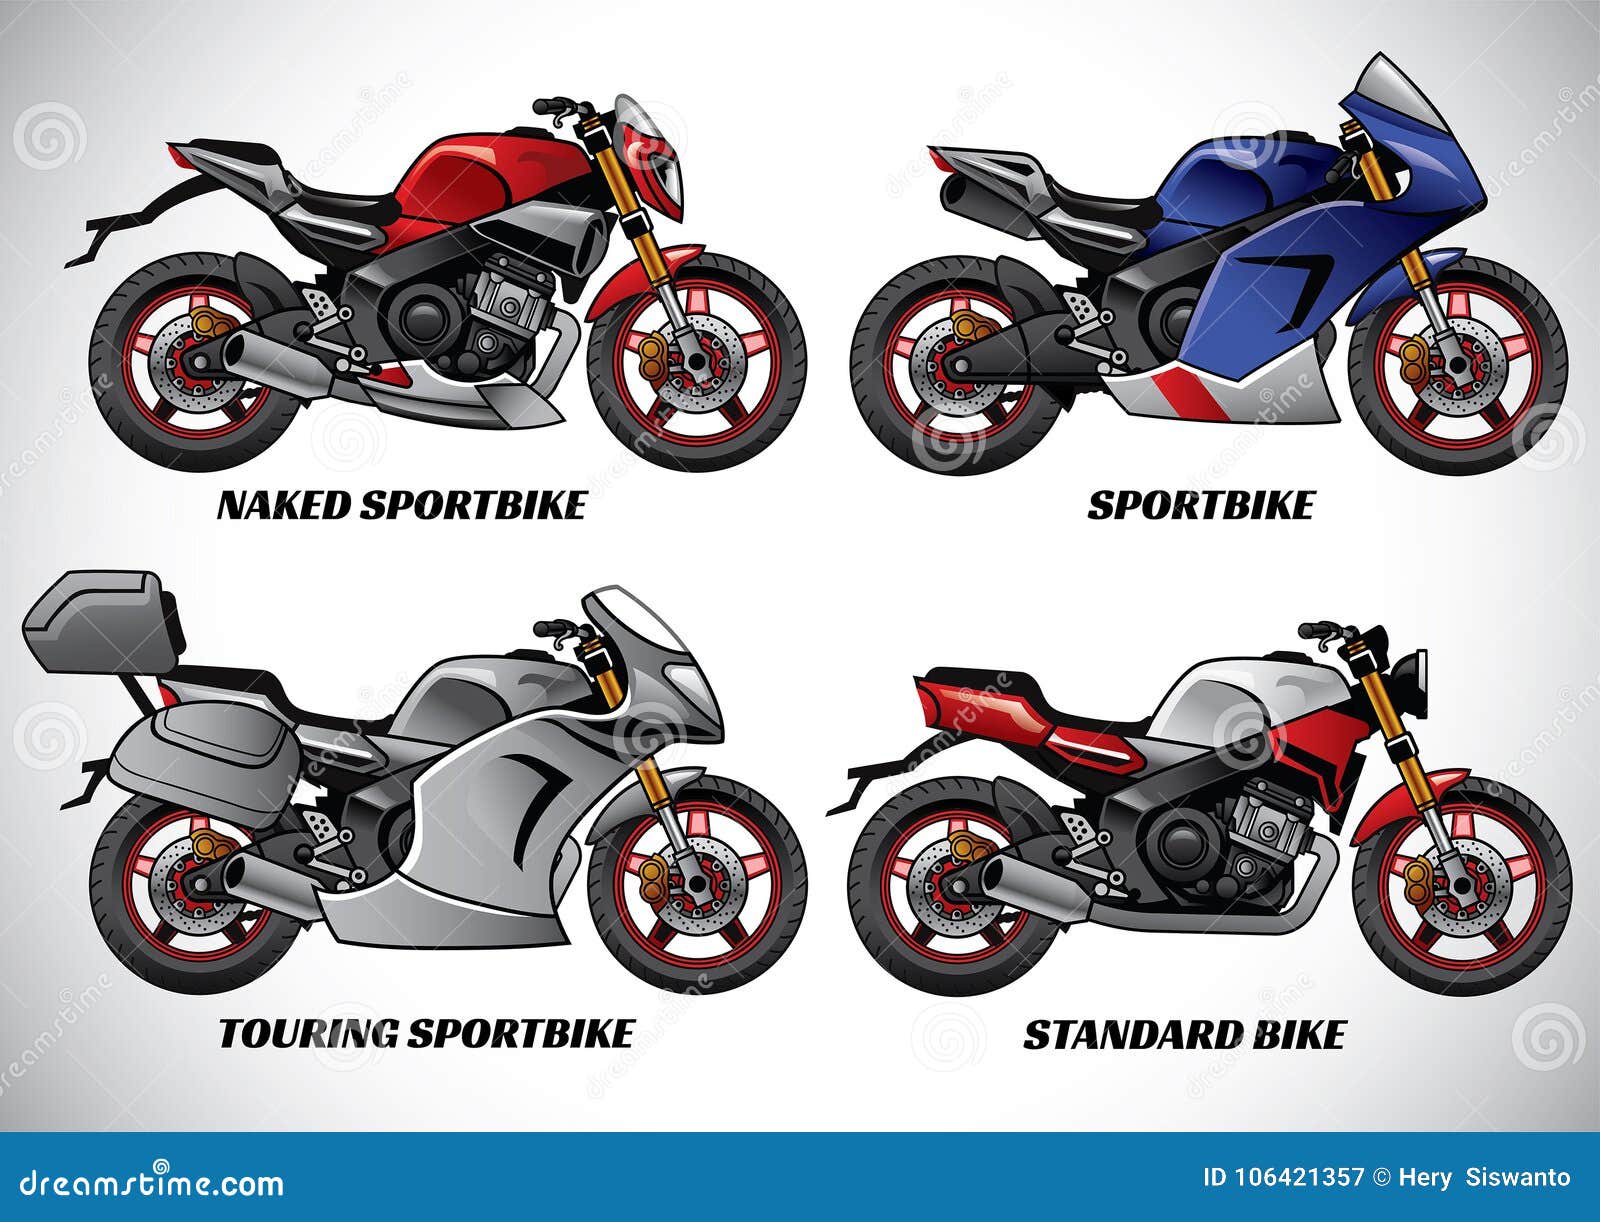 Мопед и мотоцикл разница. Типы мотоциклов. Типы мототехники. Мотоцикл разновидности стилей.